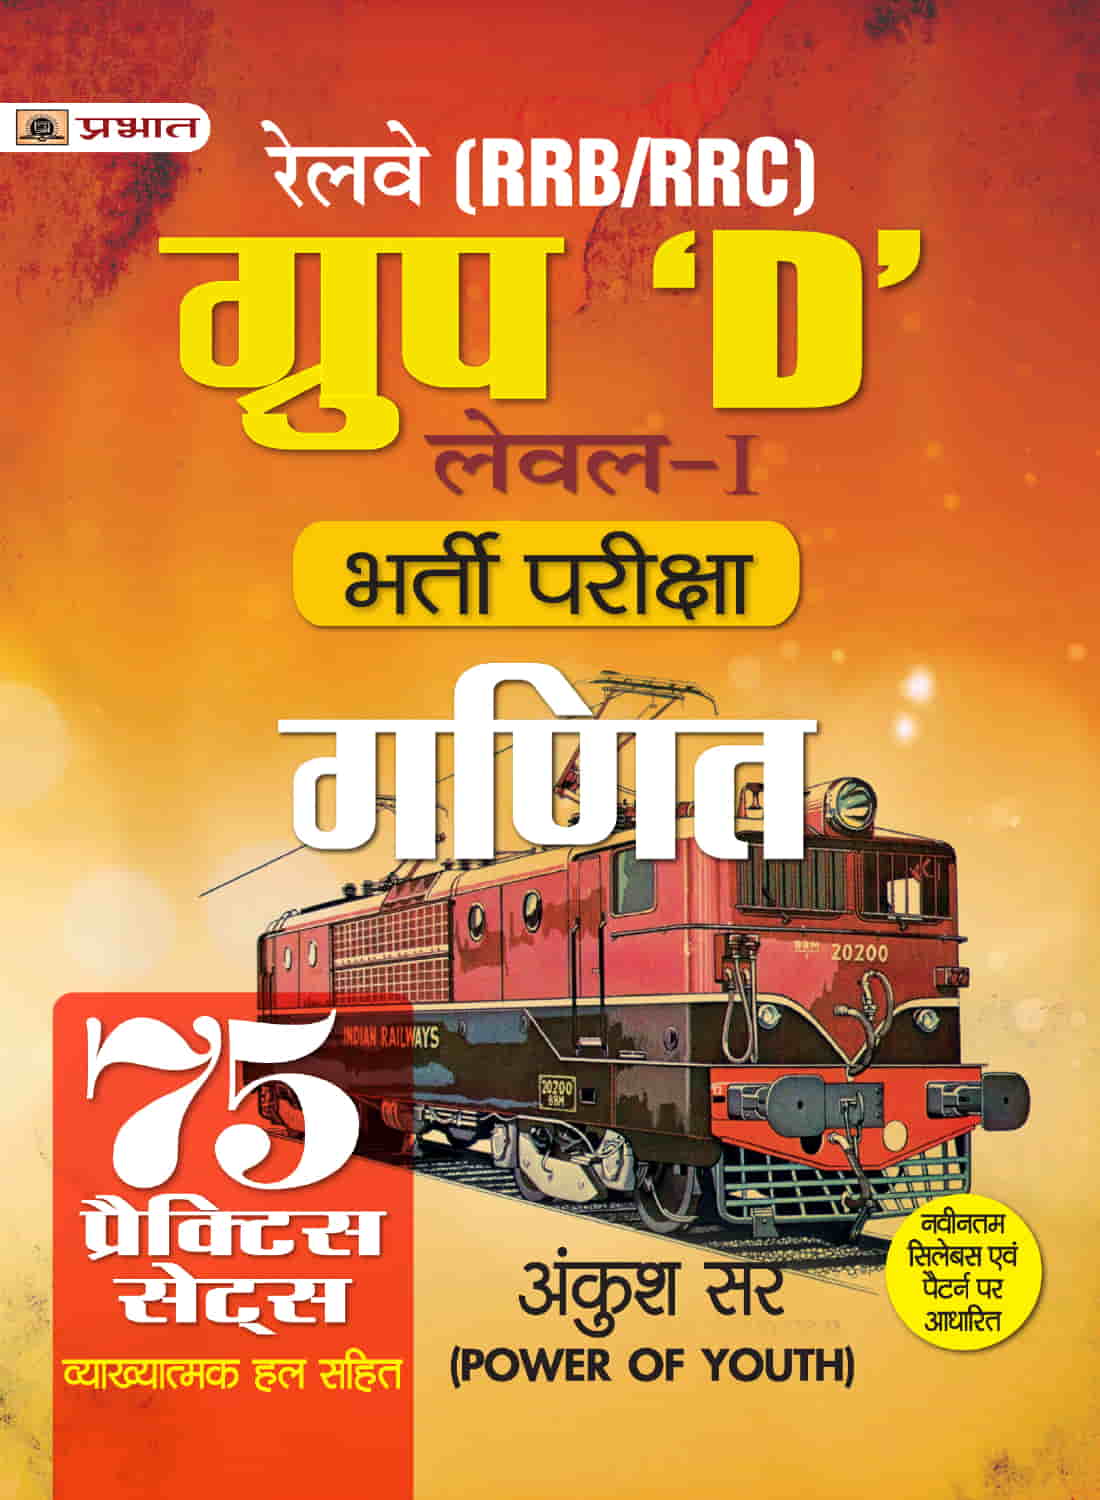 RRB/RRC Group D Level-I Bharti Pareeksha Ganit (Railway Recruitment Exam Mathematics 75 Practice Sets in Hindi) 